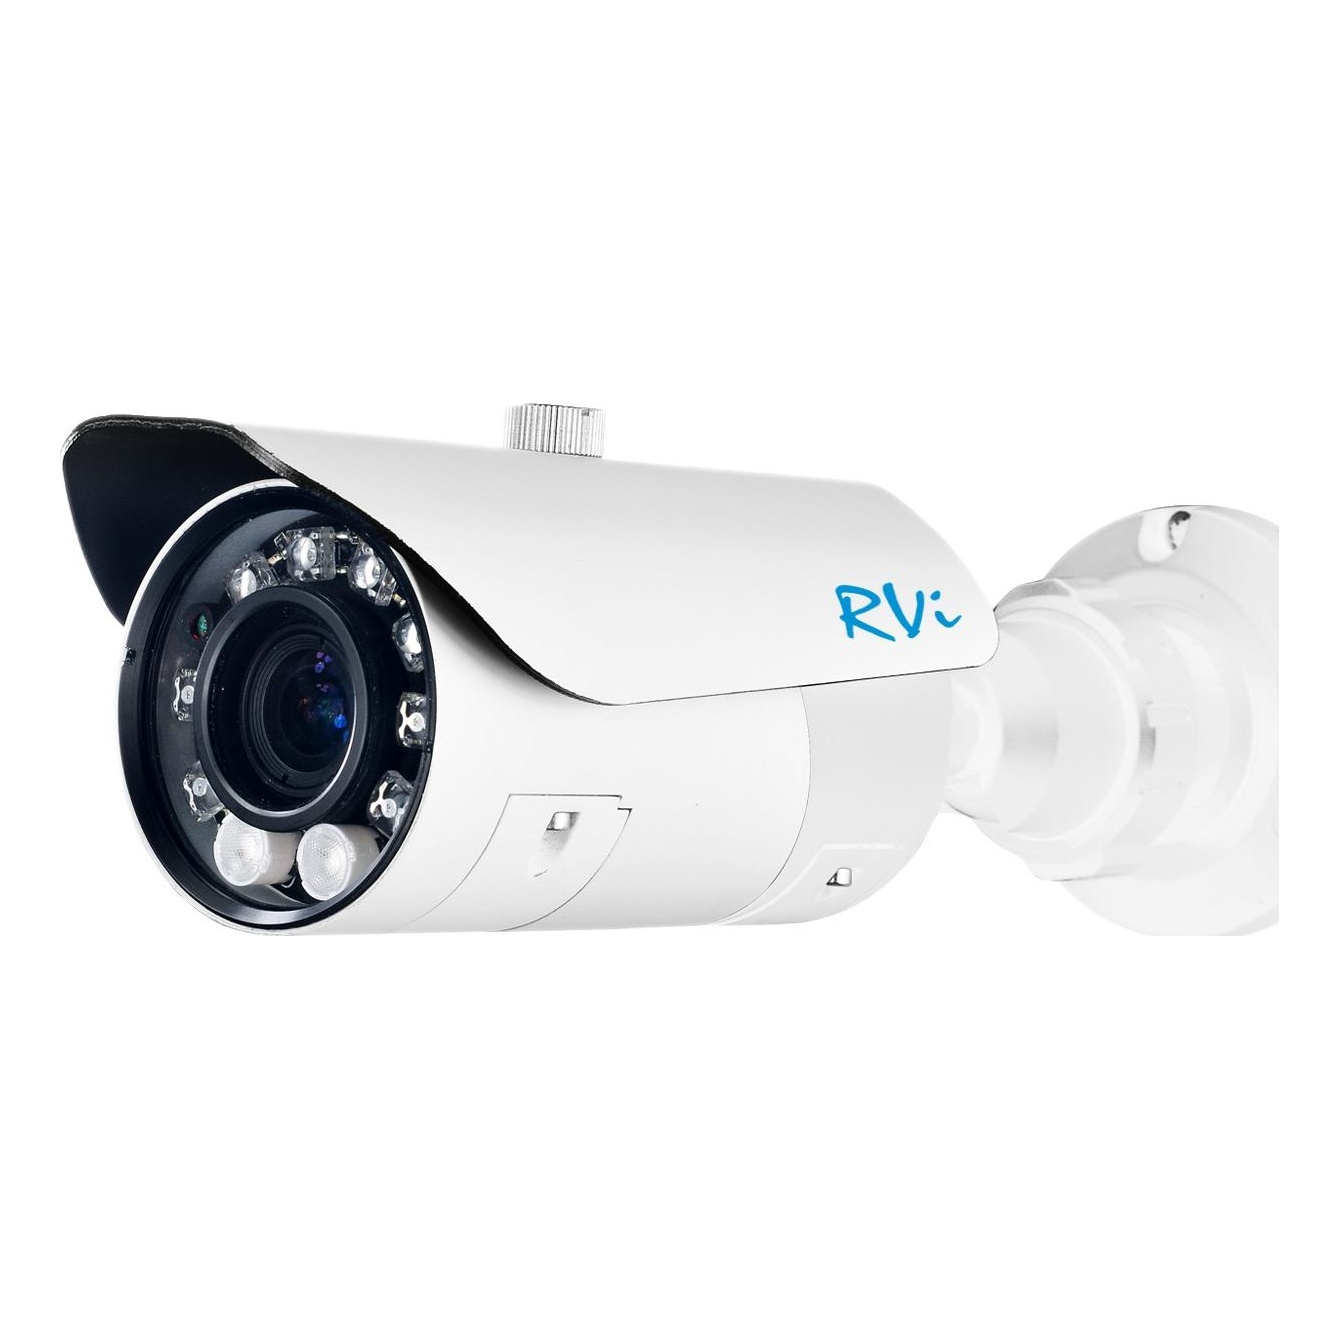 RVi-IPC44 (3.0-12 mm) IP видеокамера